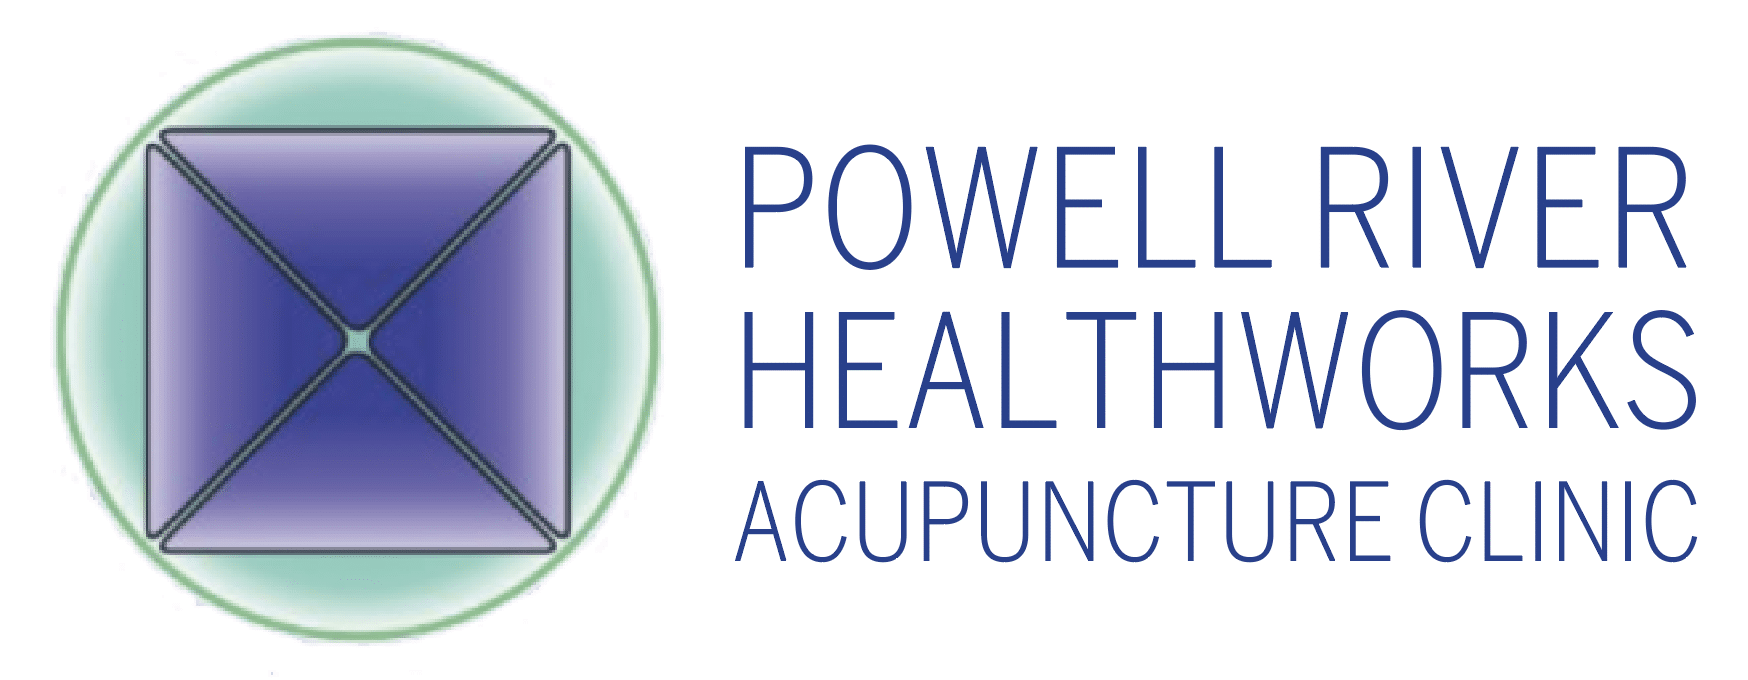 PR Healthworks logo